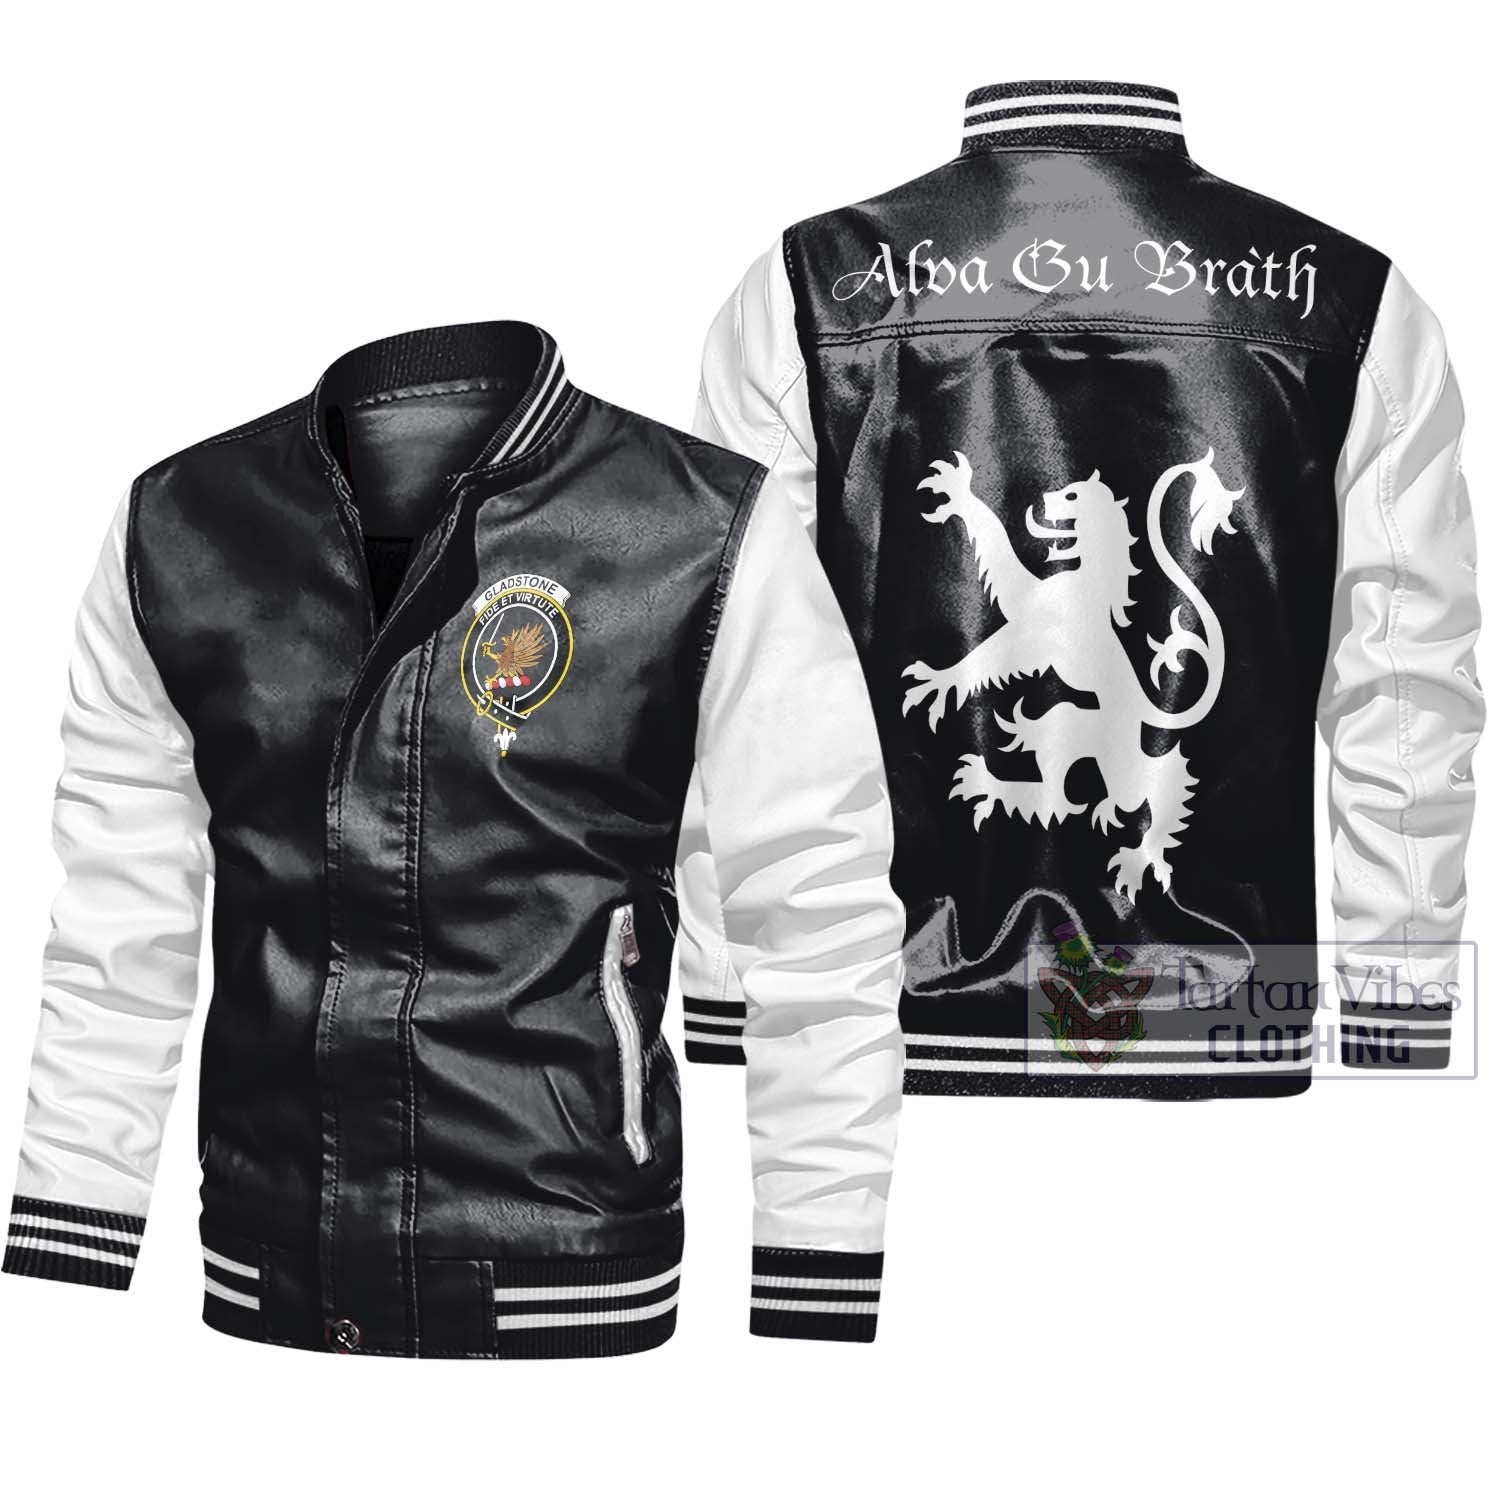 Tartan Vibes Clothing Gladstone Family Crest Leather Bomber Jacket Lion Rampant Alba Gu Brath Style